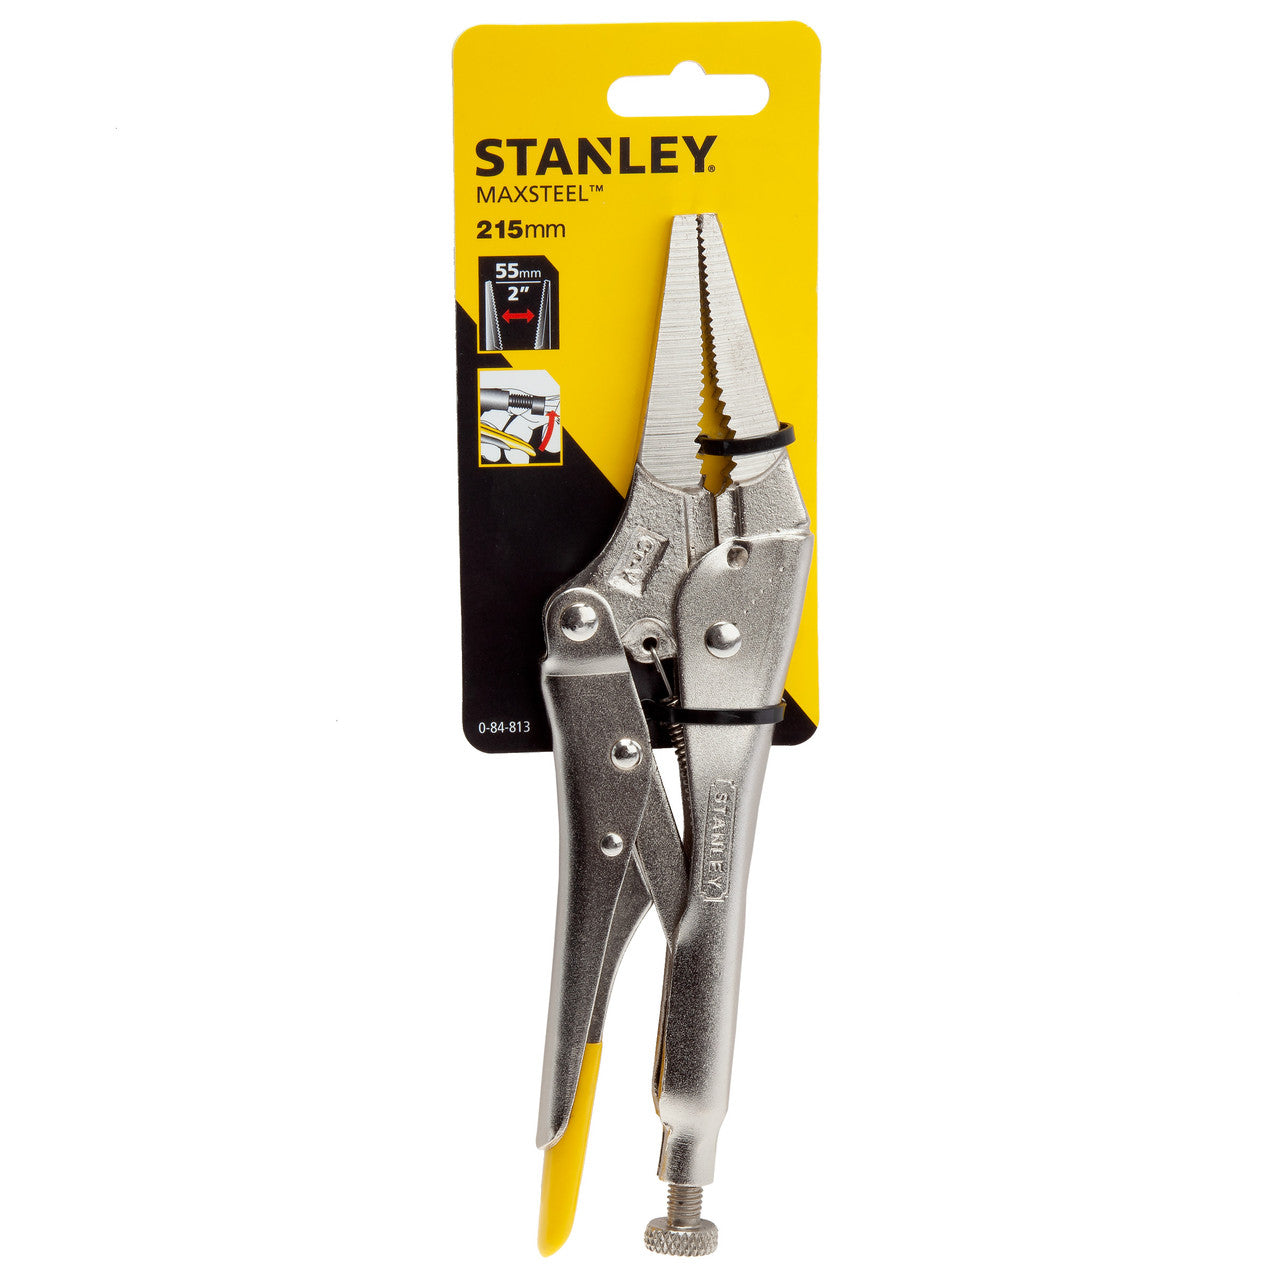 Stanley 0-84-813 MaxSteel Locking Pliers Long Nose 215mm